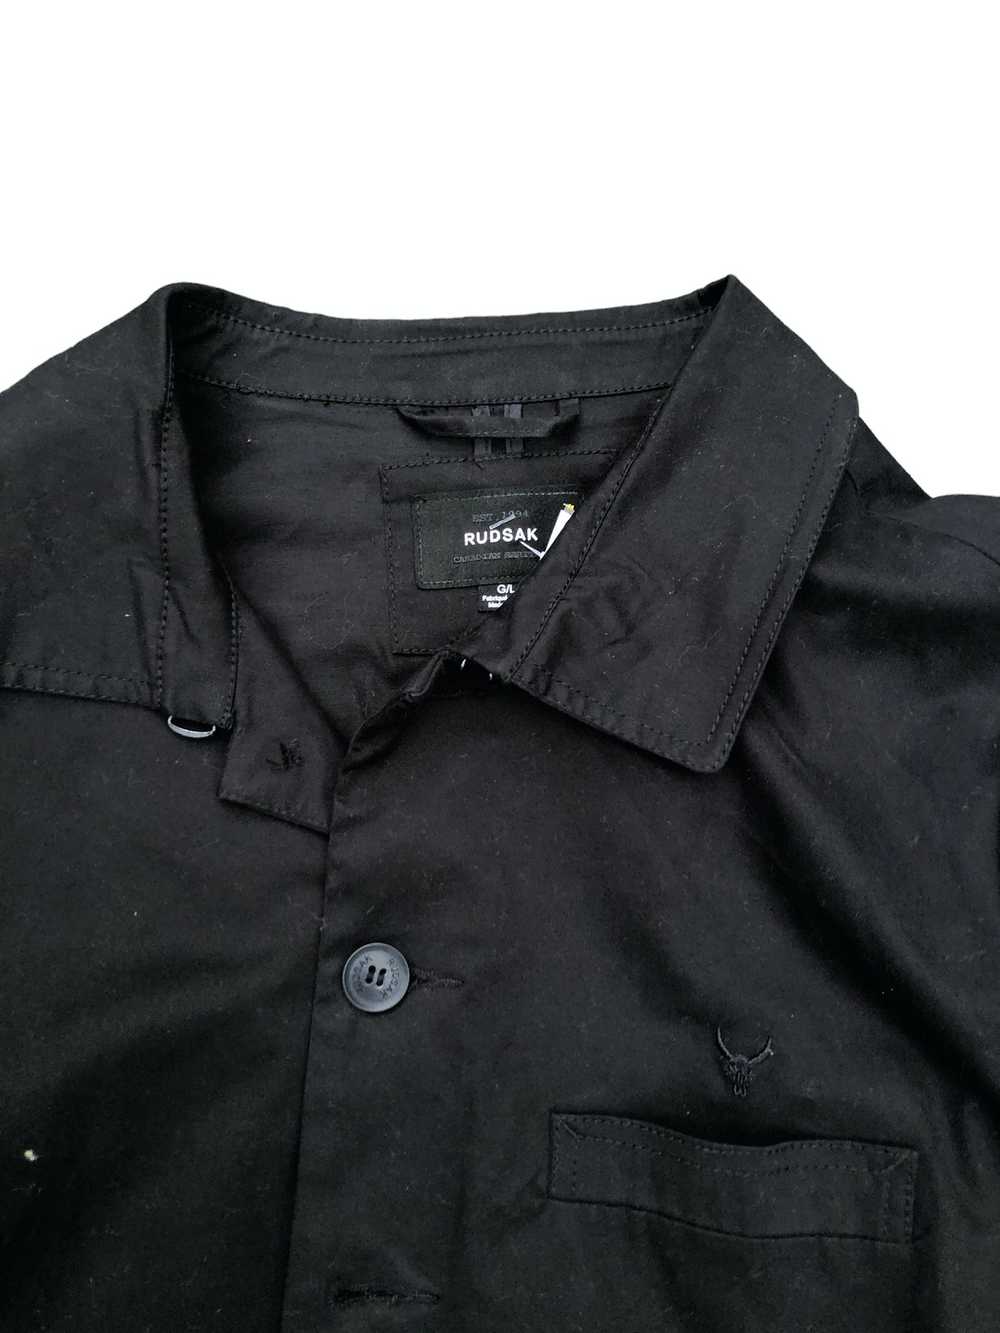 Rudsak RARE Rudsak Jacket Button Up Shirt Large B… - image 9